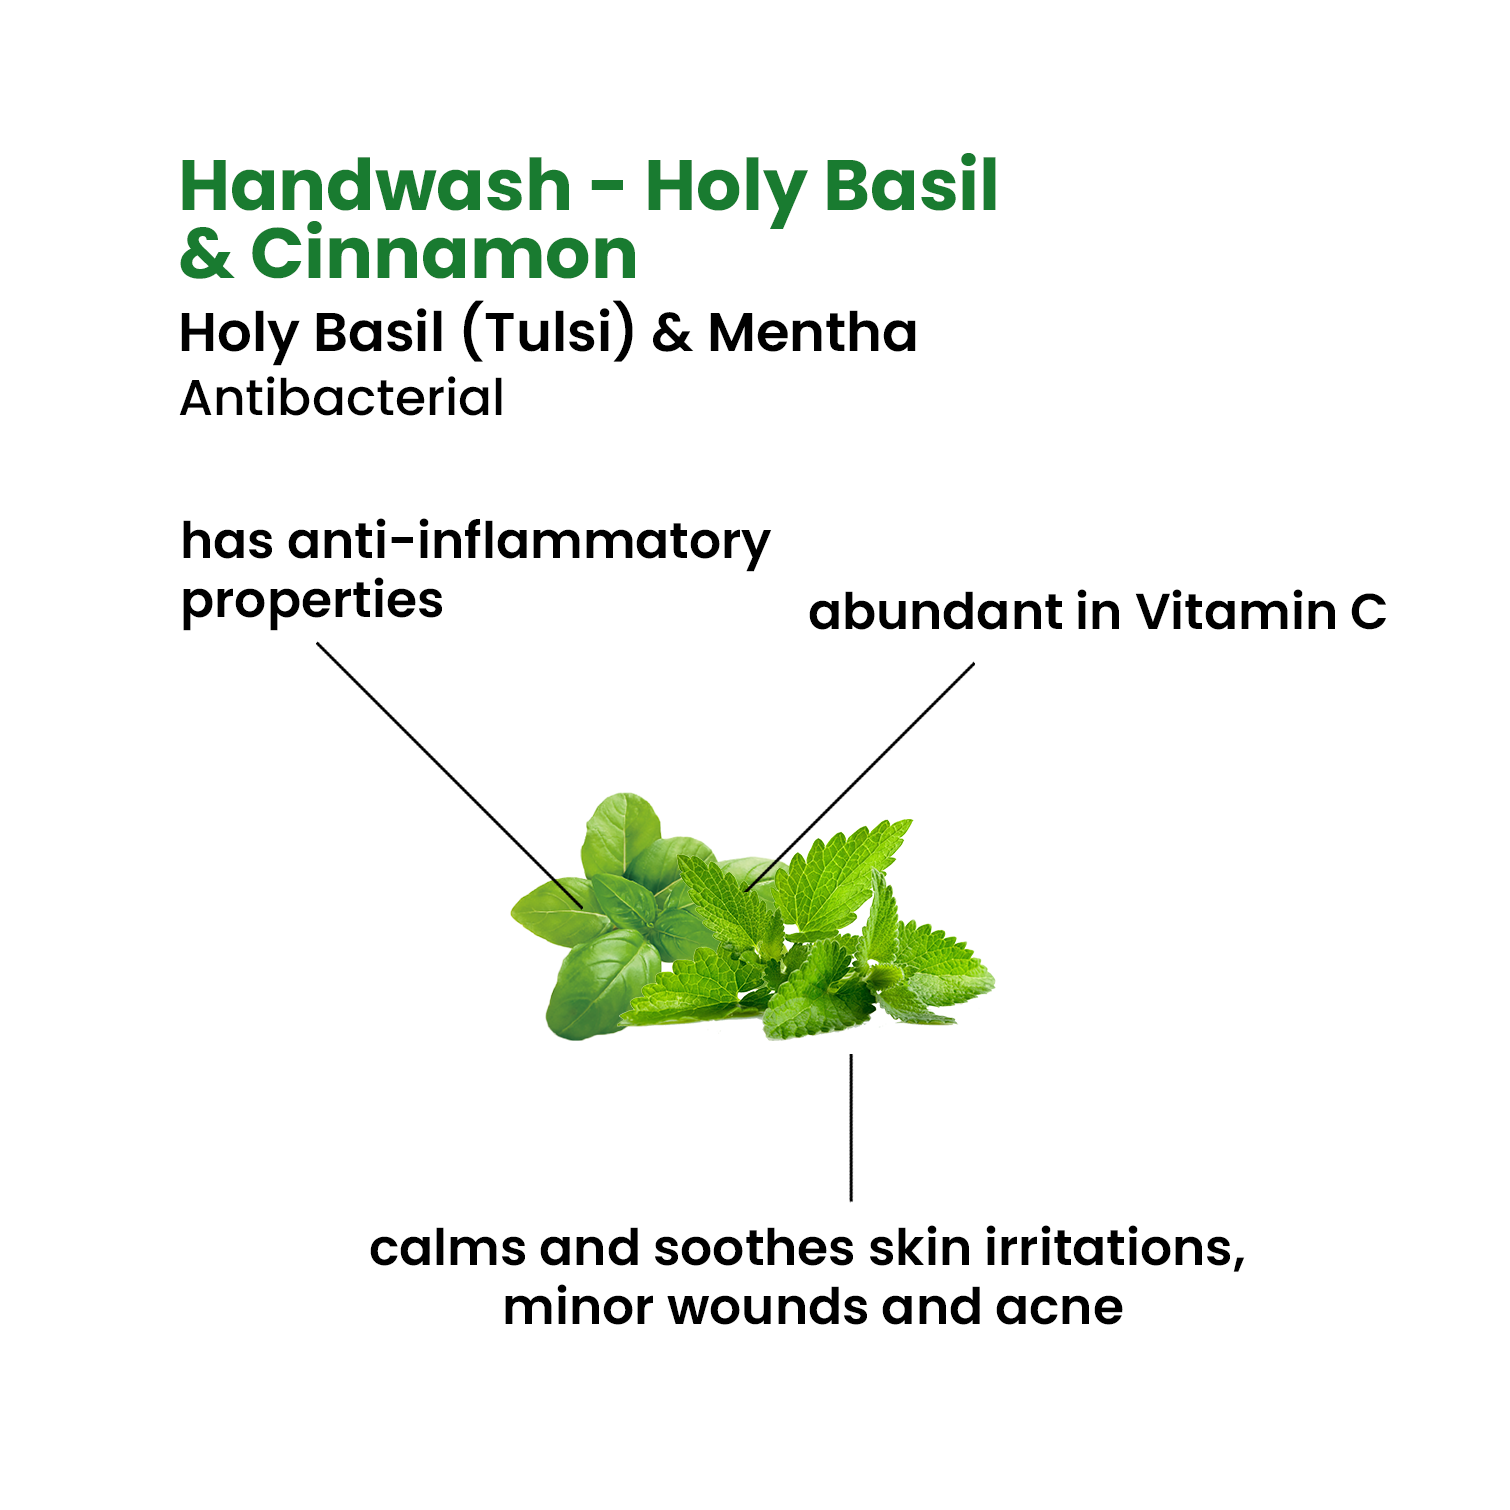 Photo of Handwash - Holy Basil & Cinnamon 2